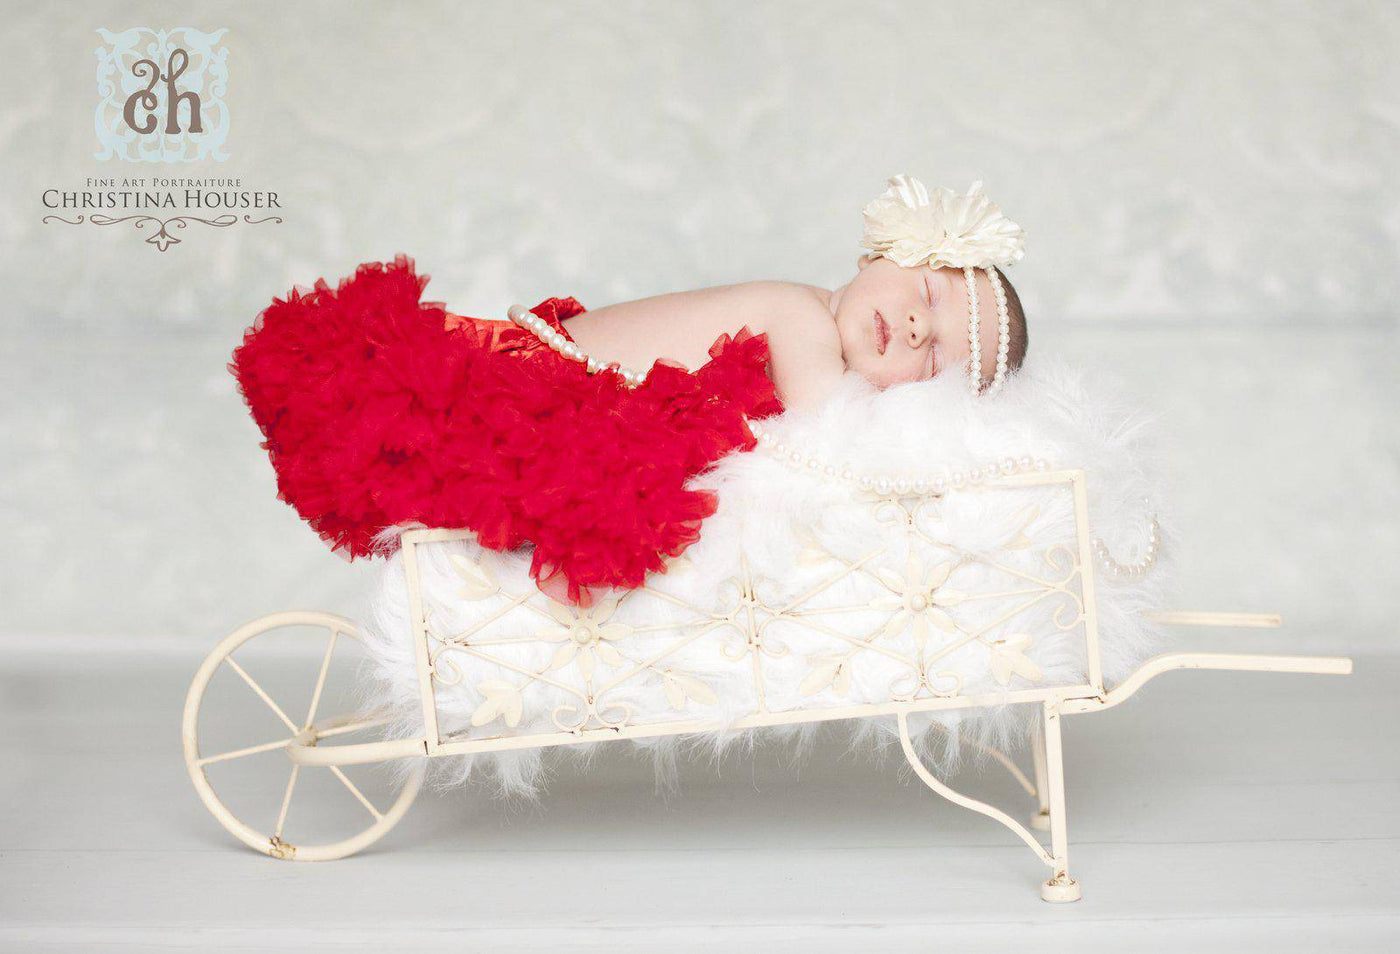 White Mongolian Fur Rug Photography Prop Newborn Baby - Beautiful Photo Props